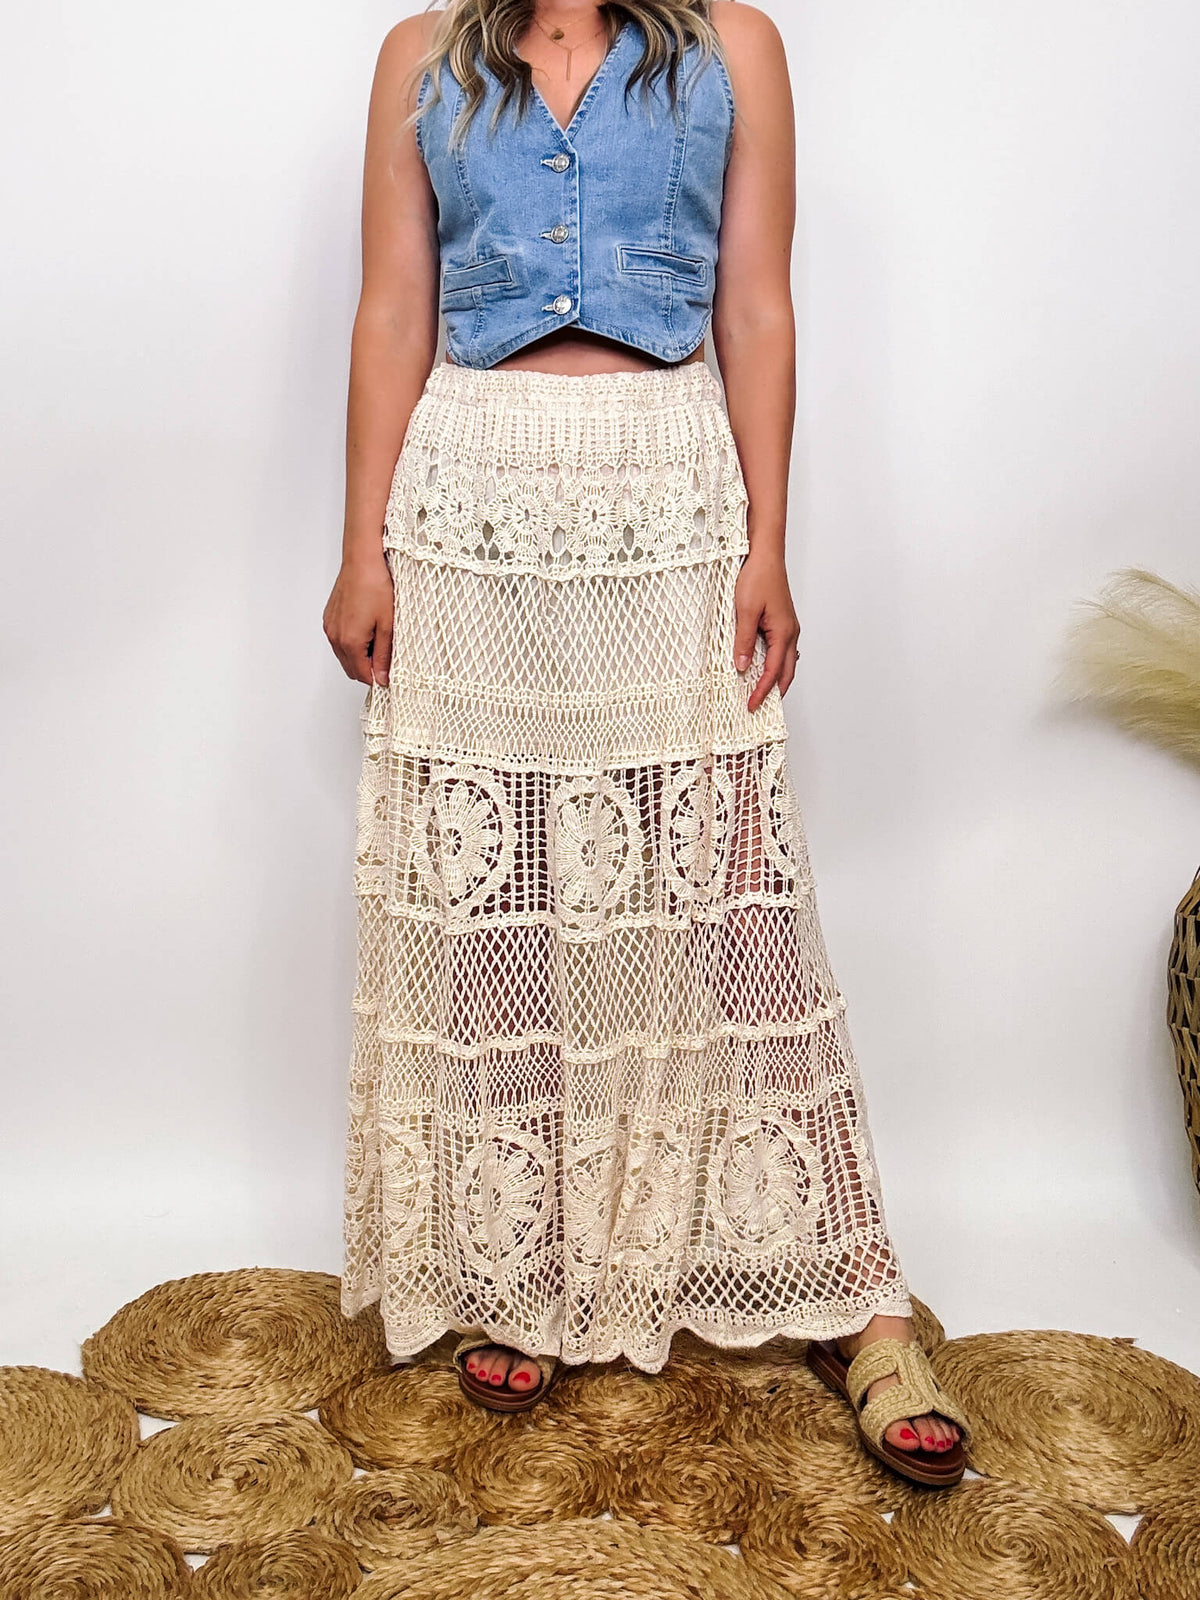 POL Clothing Boho Natural Cream Crochet Maxi Skirt  Elastic Waistband Knit Inner Skirt Lining One Size Fits Sizes 1-8 100% Cotton